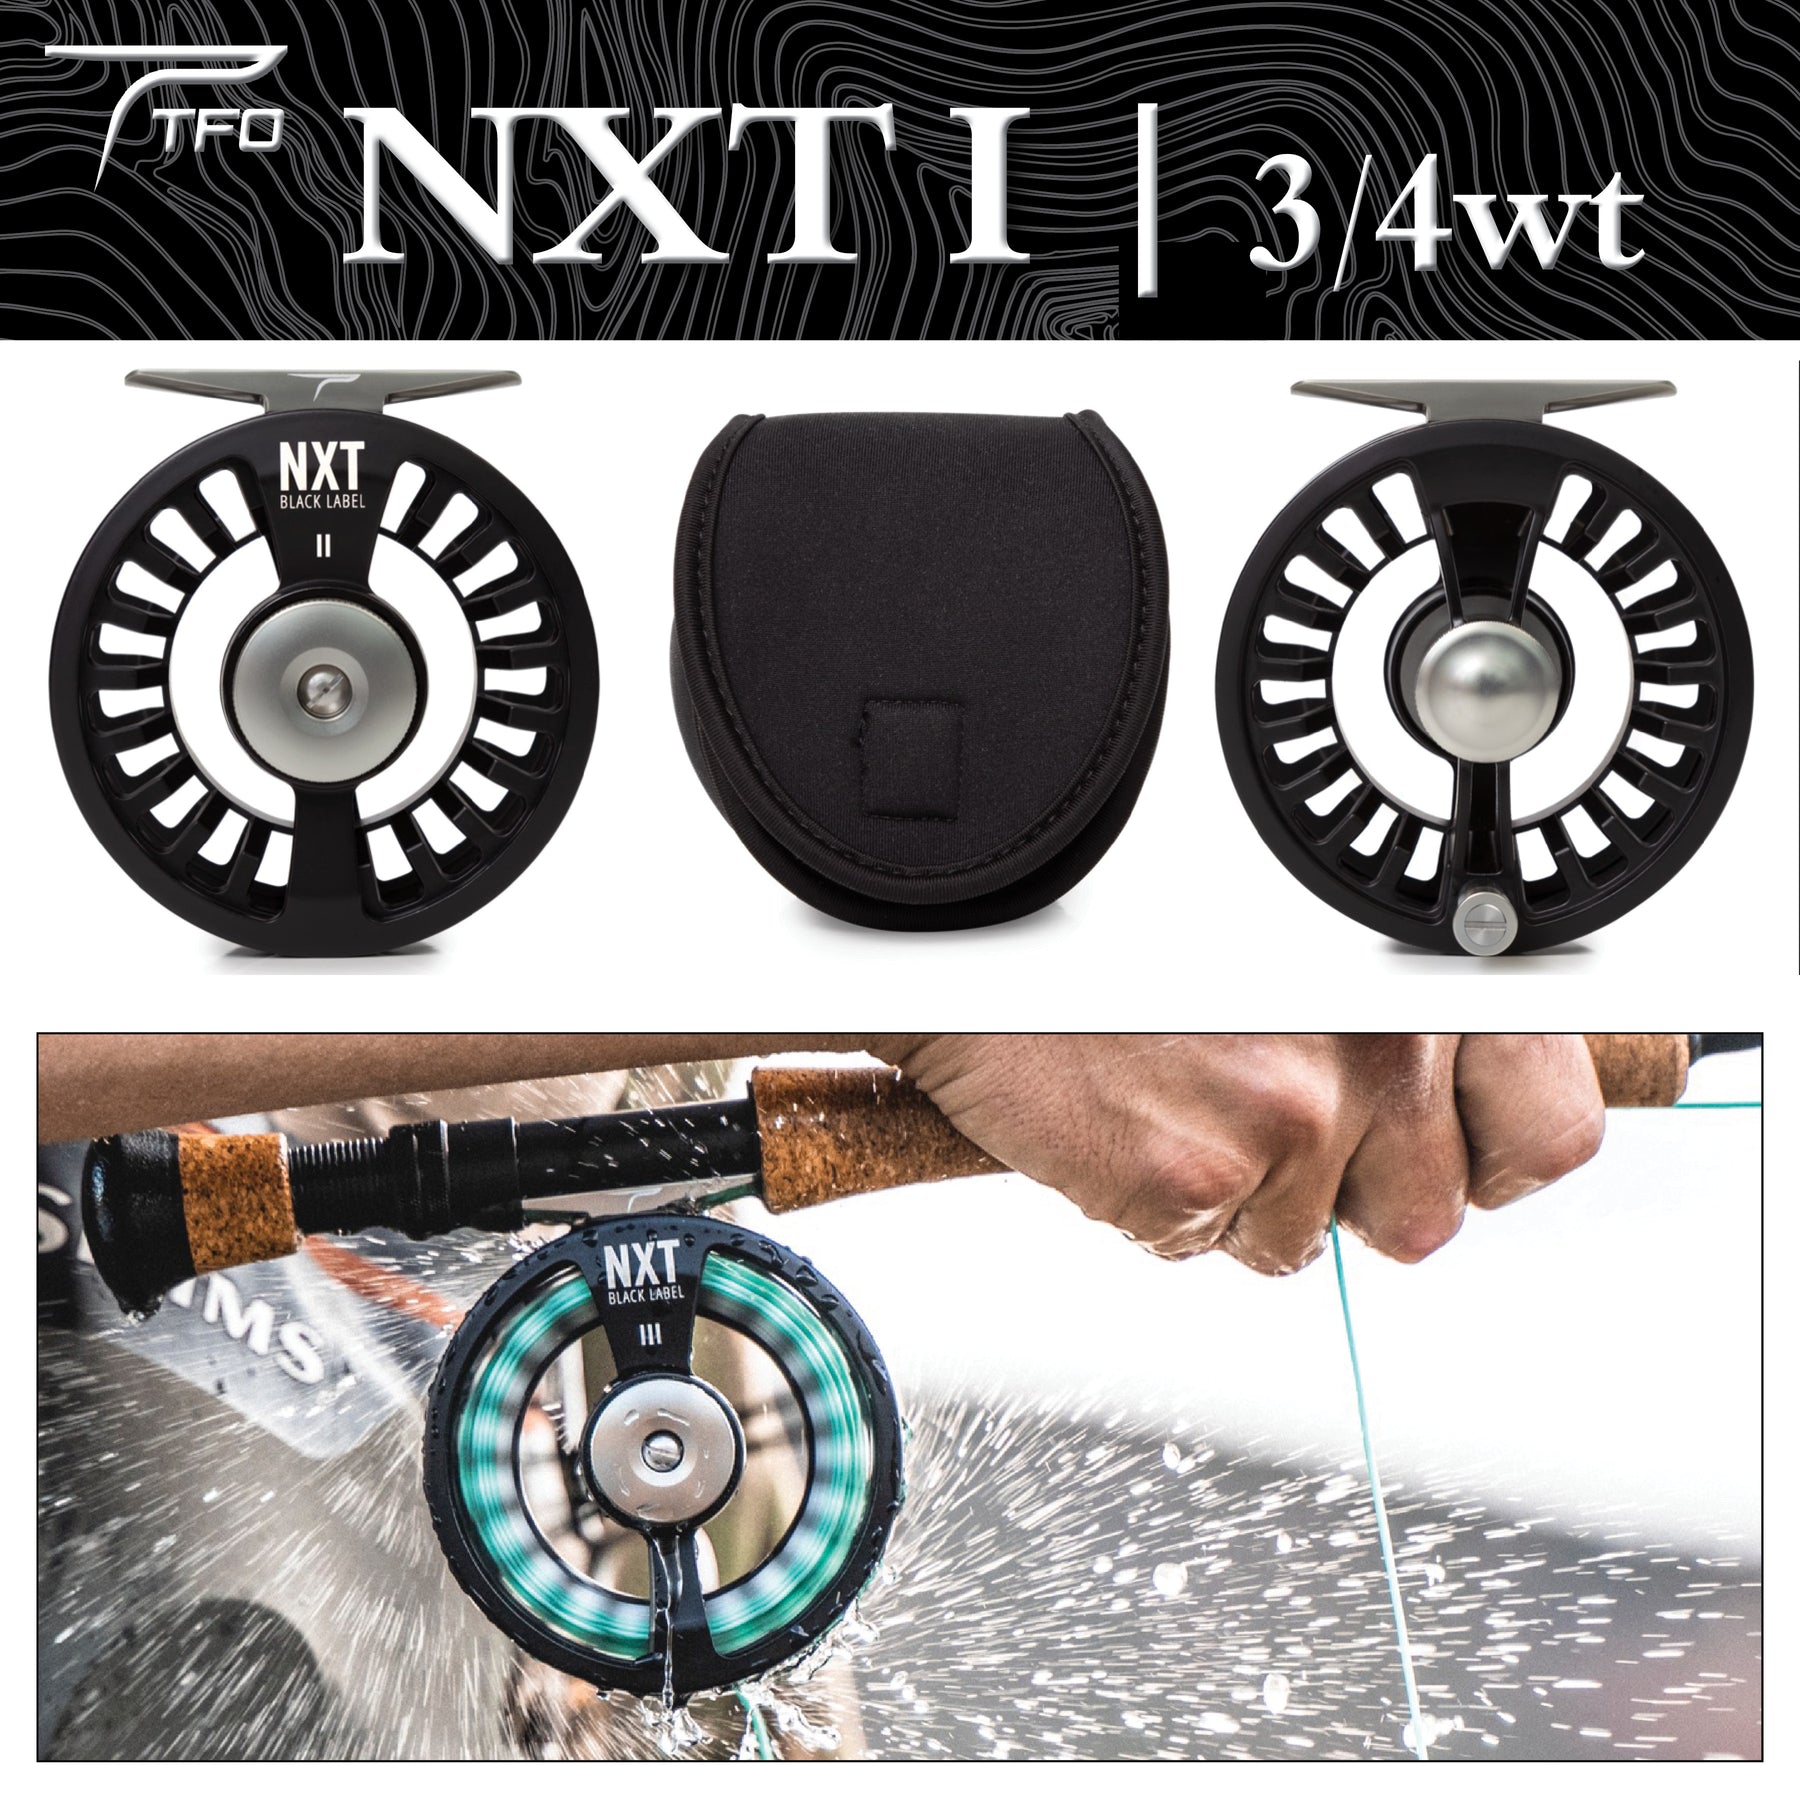 TFO NXT Black Label I 3/4wt Fly Reel – Raft & Fly Shop